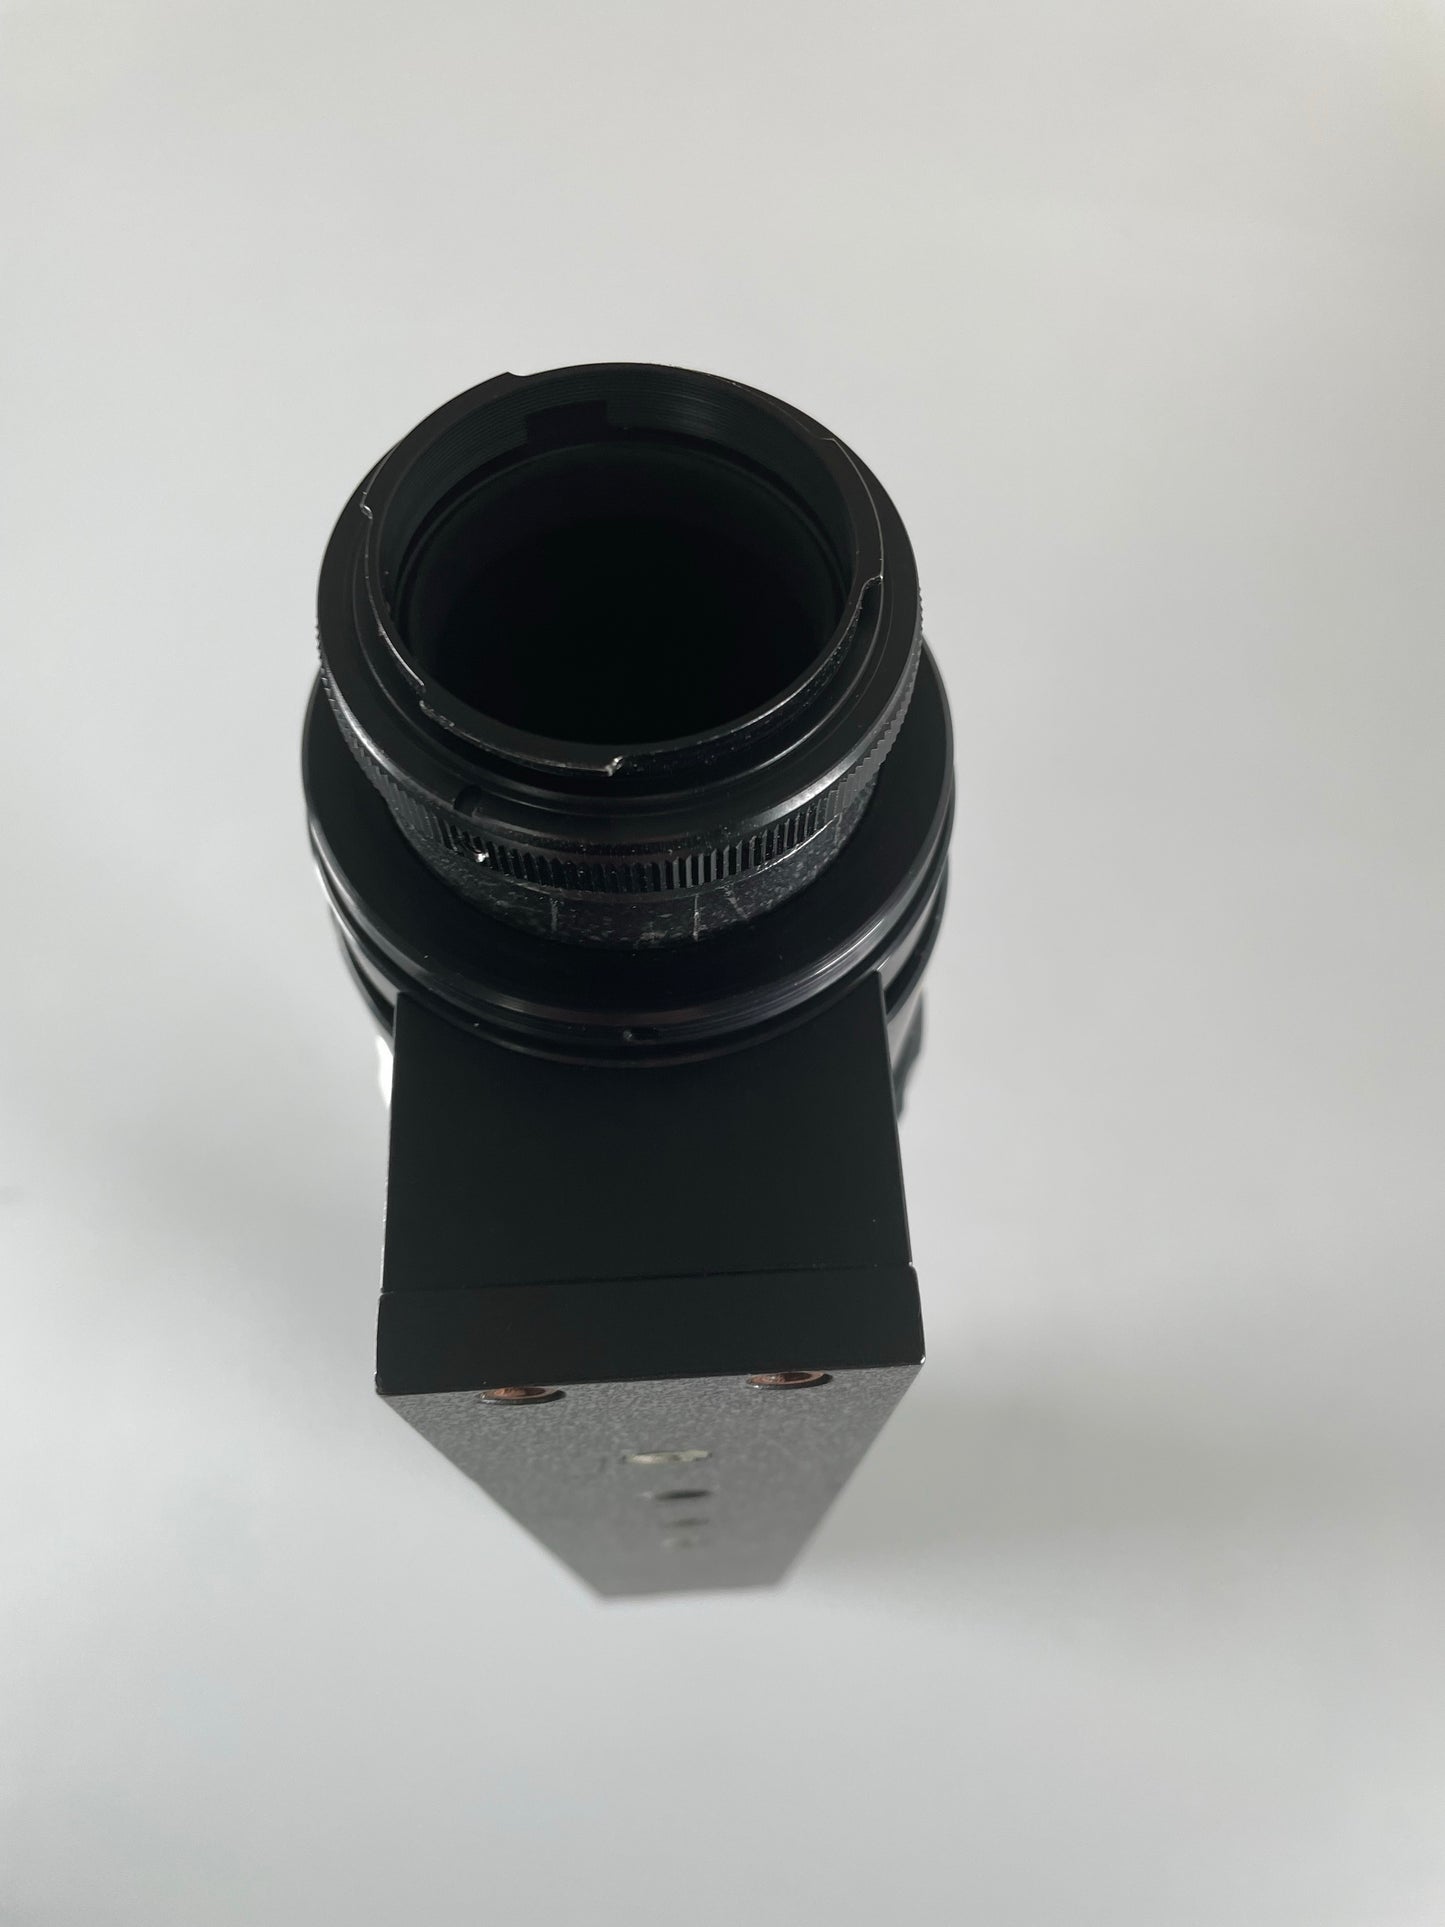 Century 600mm f6.8 Tele-Athenar telephoto lens RARE